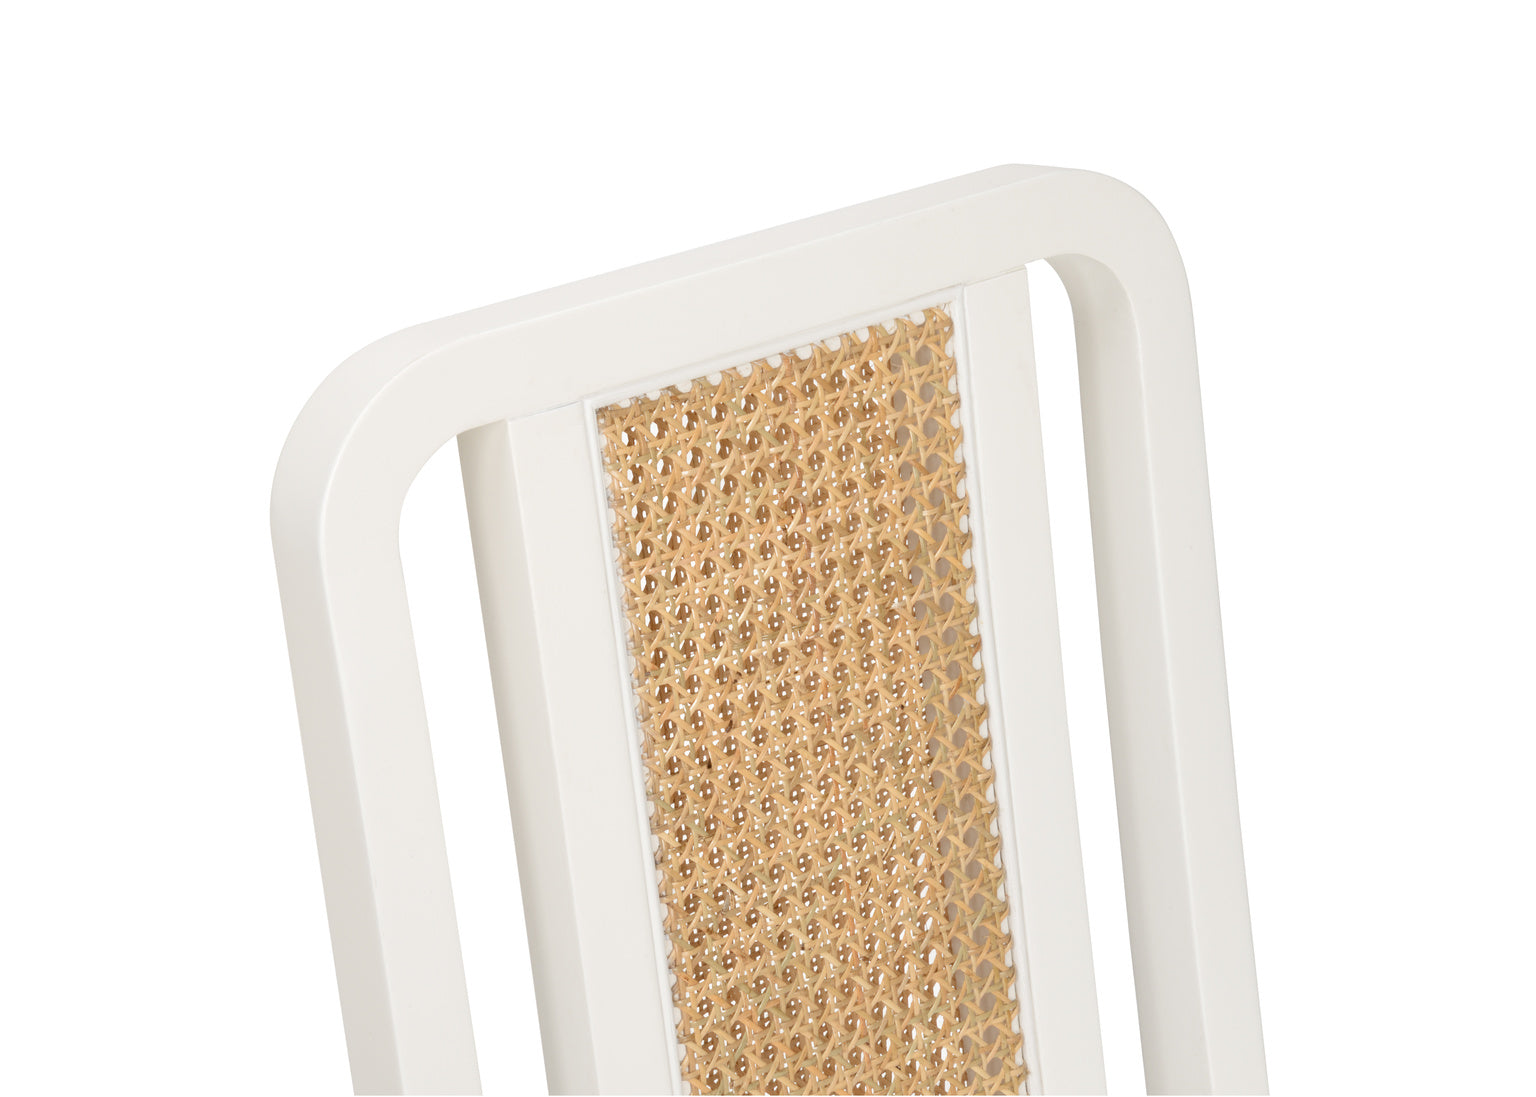 Chandigarh Chair - White